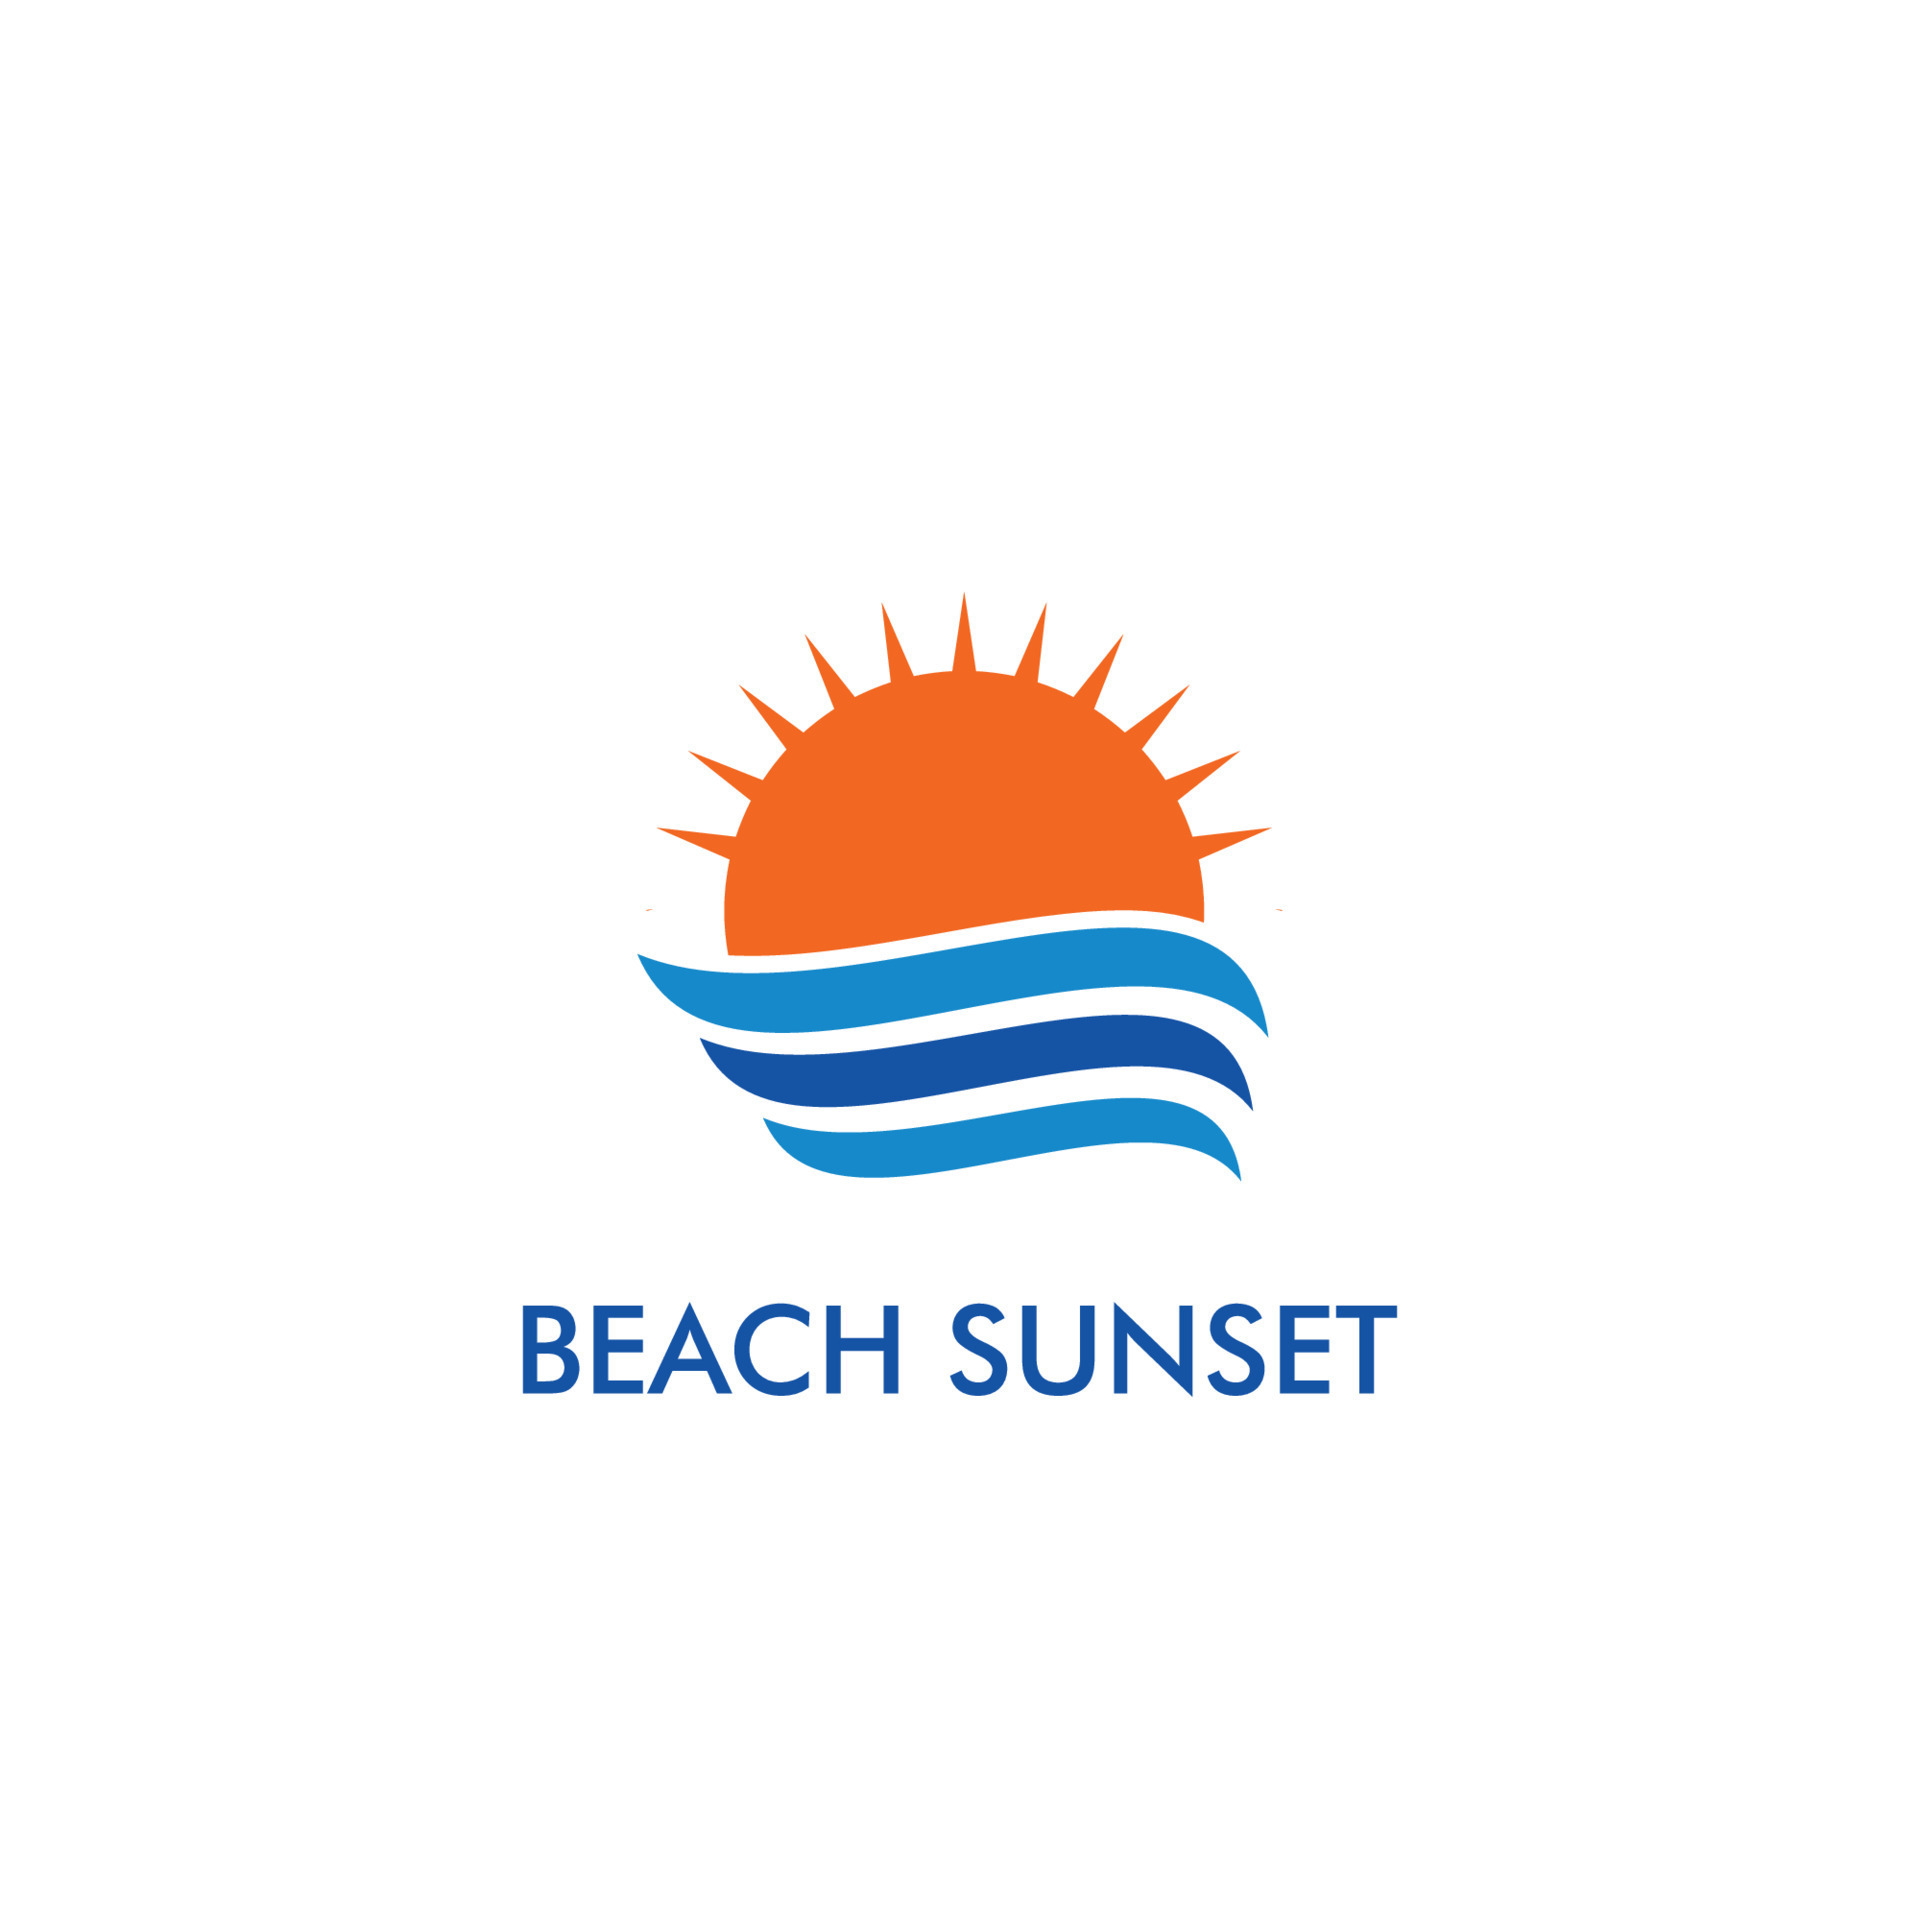 Beach, Sea, Sunset, Sunrise, logo design Vector illustration 10235688 ...